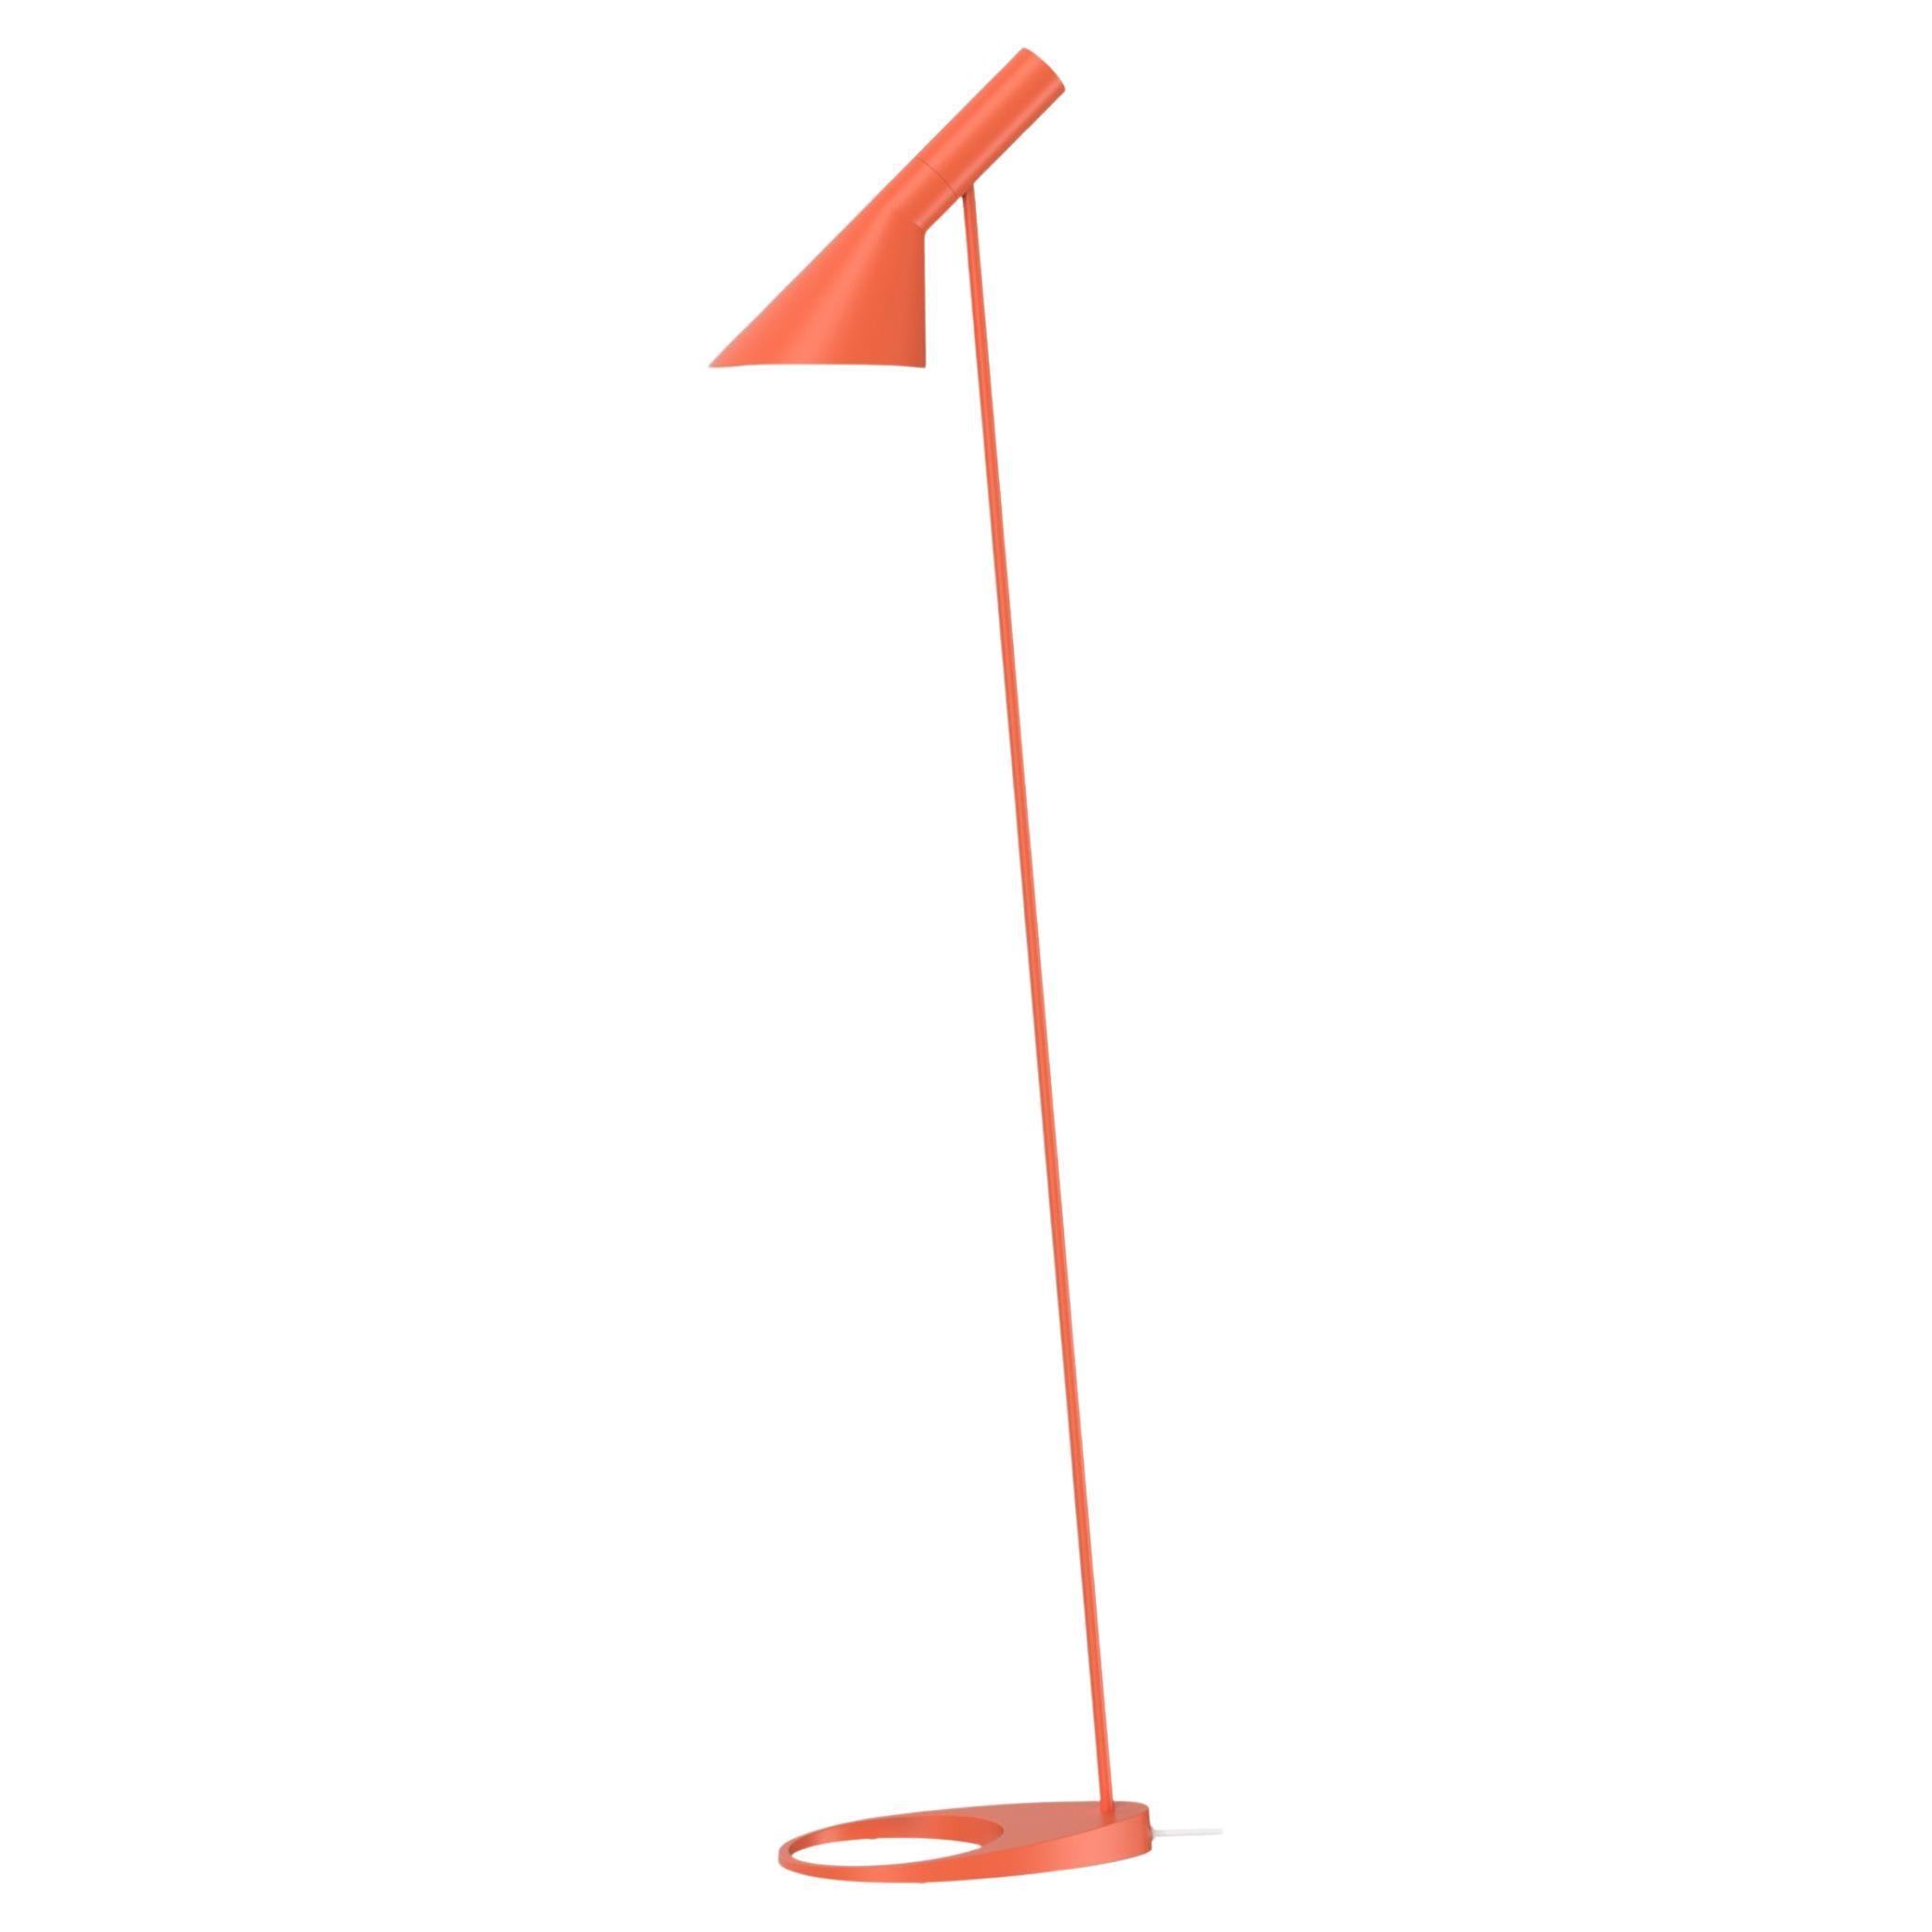 Arne Jacobsen AJ Floor Lamp in Electric Orange for Louis Poulsen For Sale